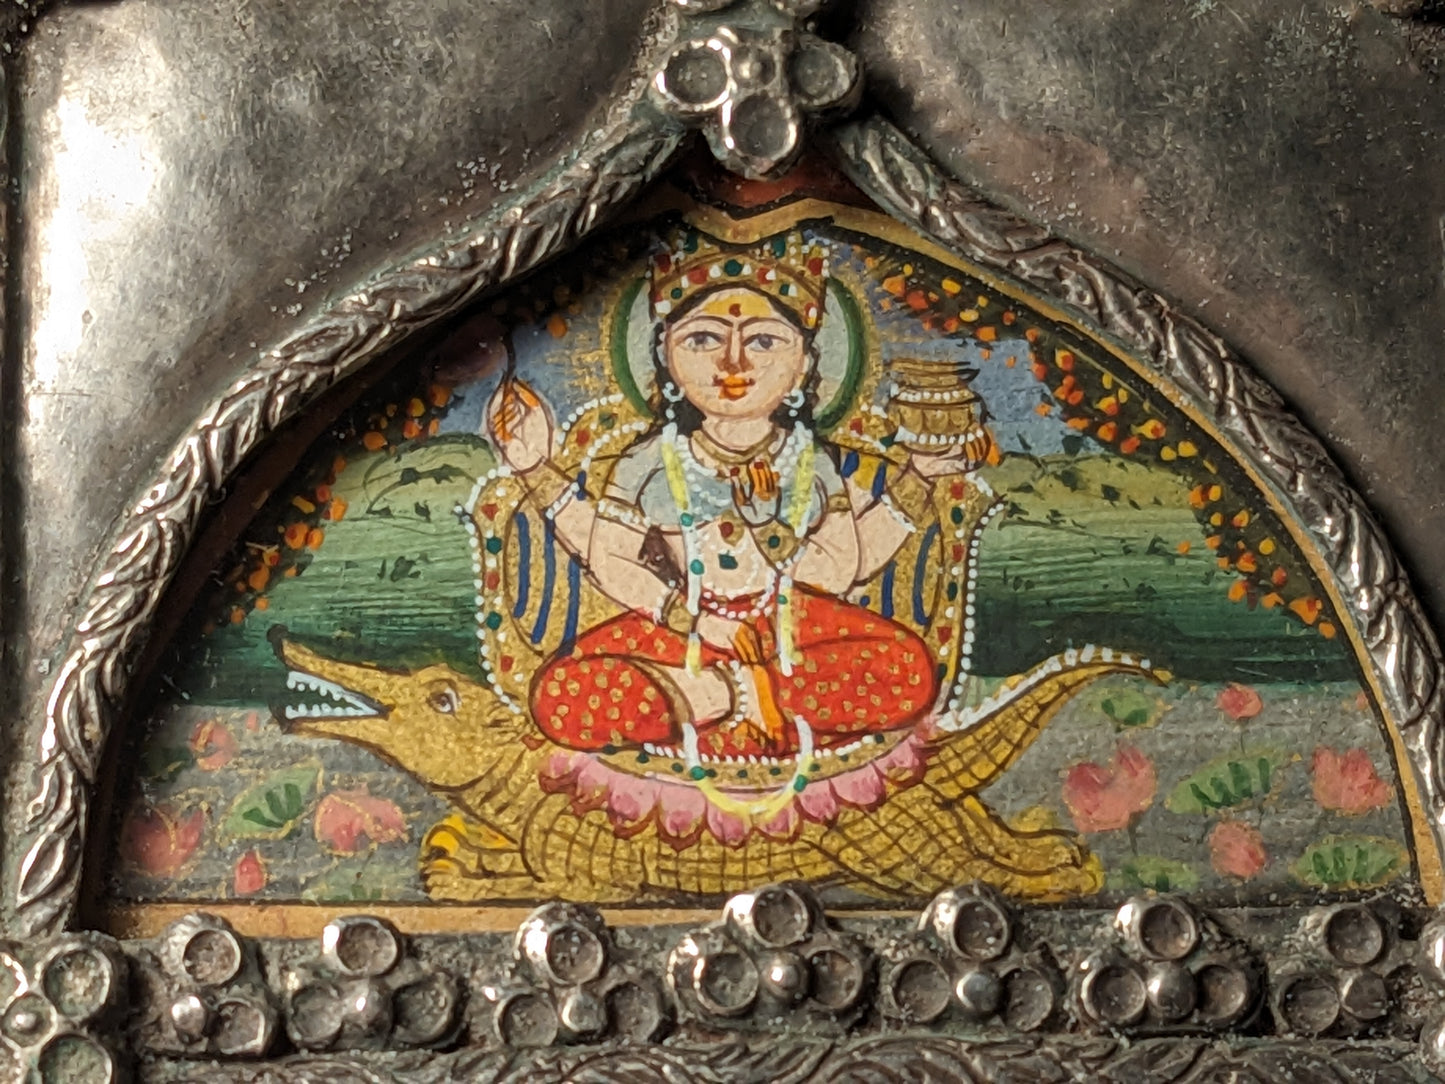 Antique Indian Silver Pendant with Goddess Ganga Image